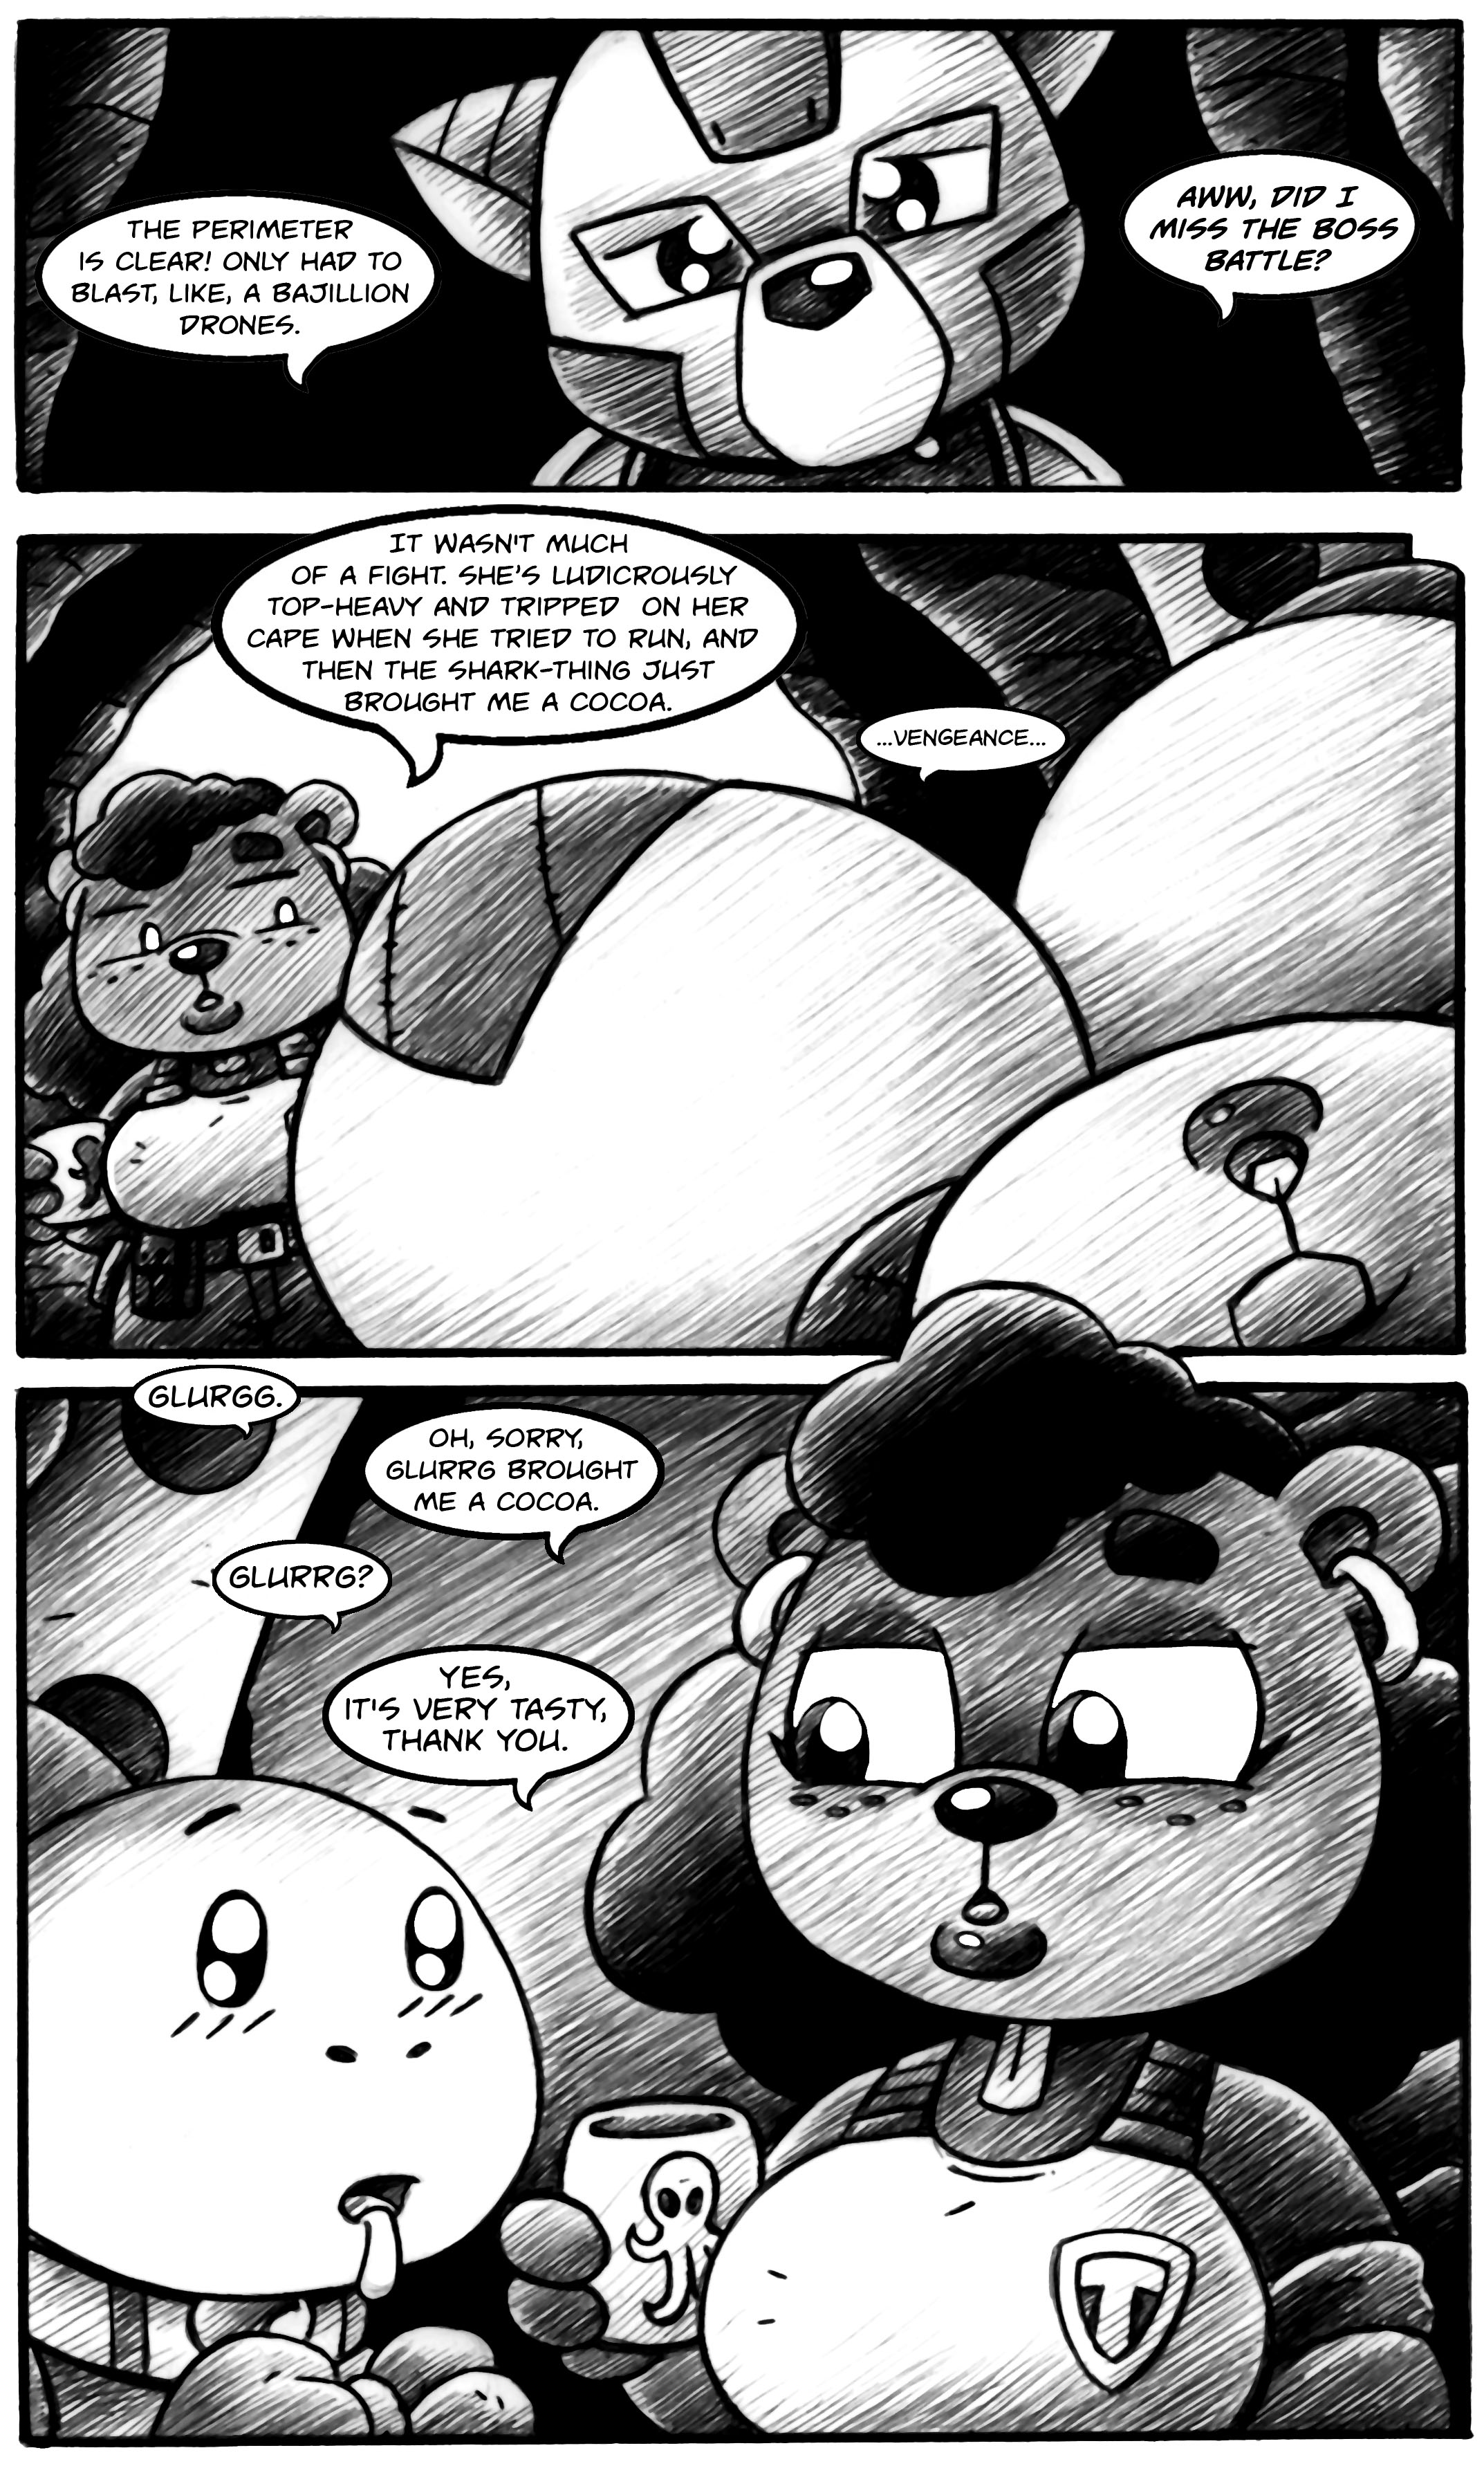 Wayfarer Rendezvous: Page 08